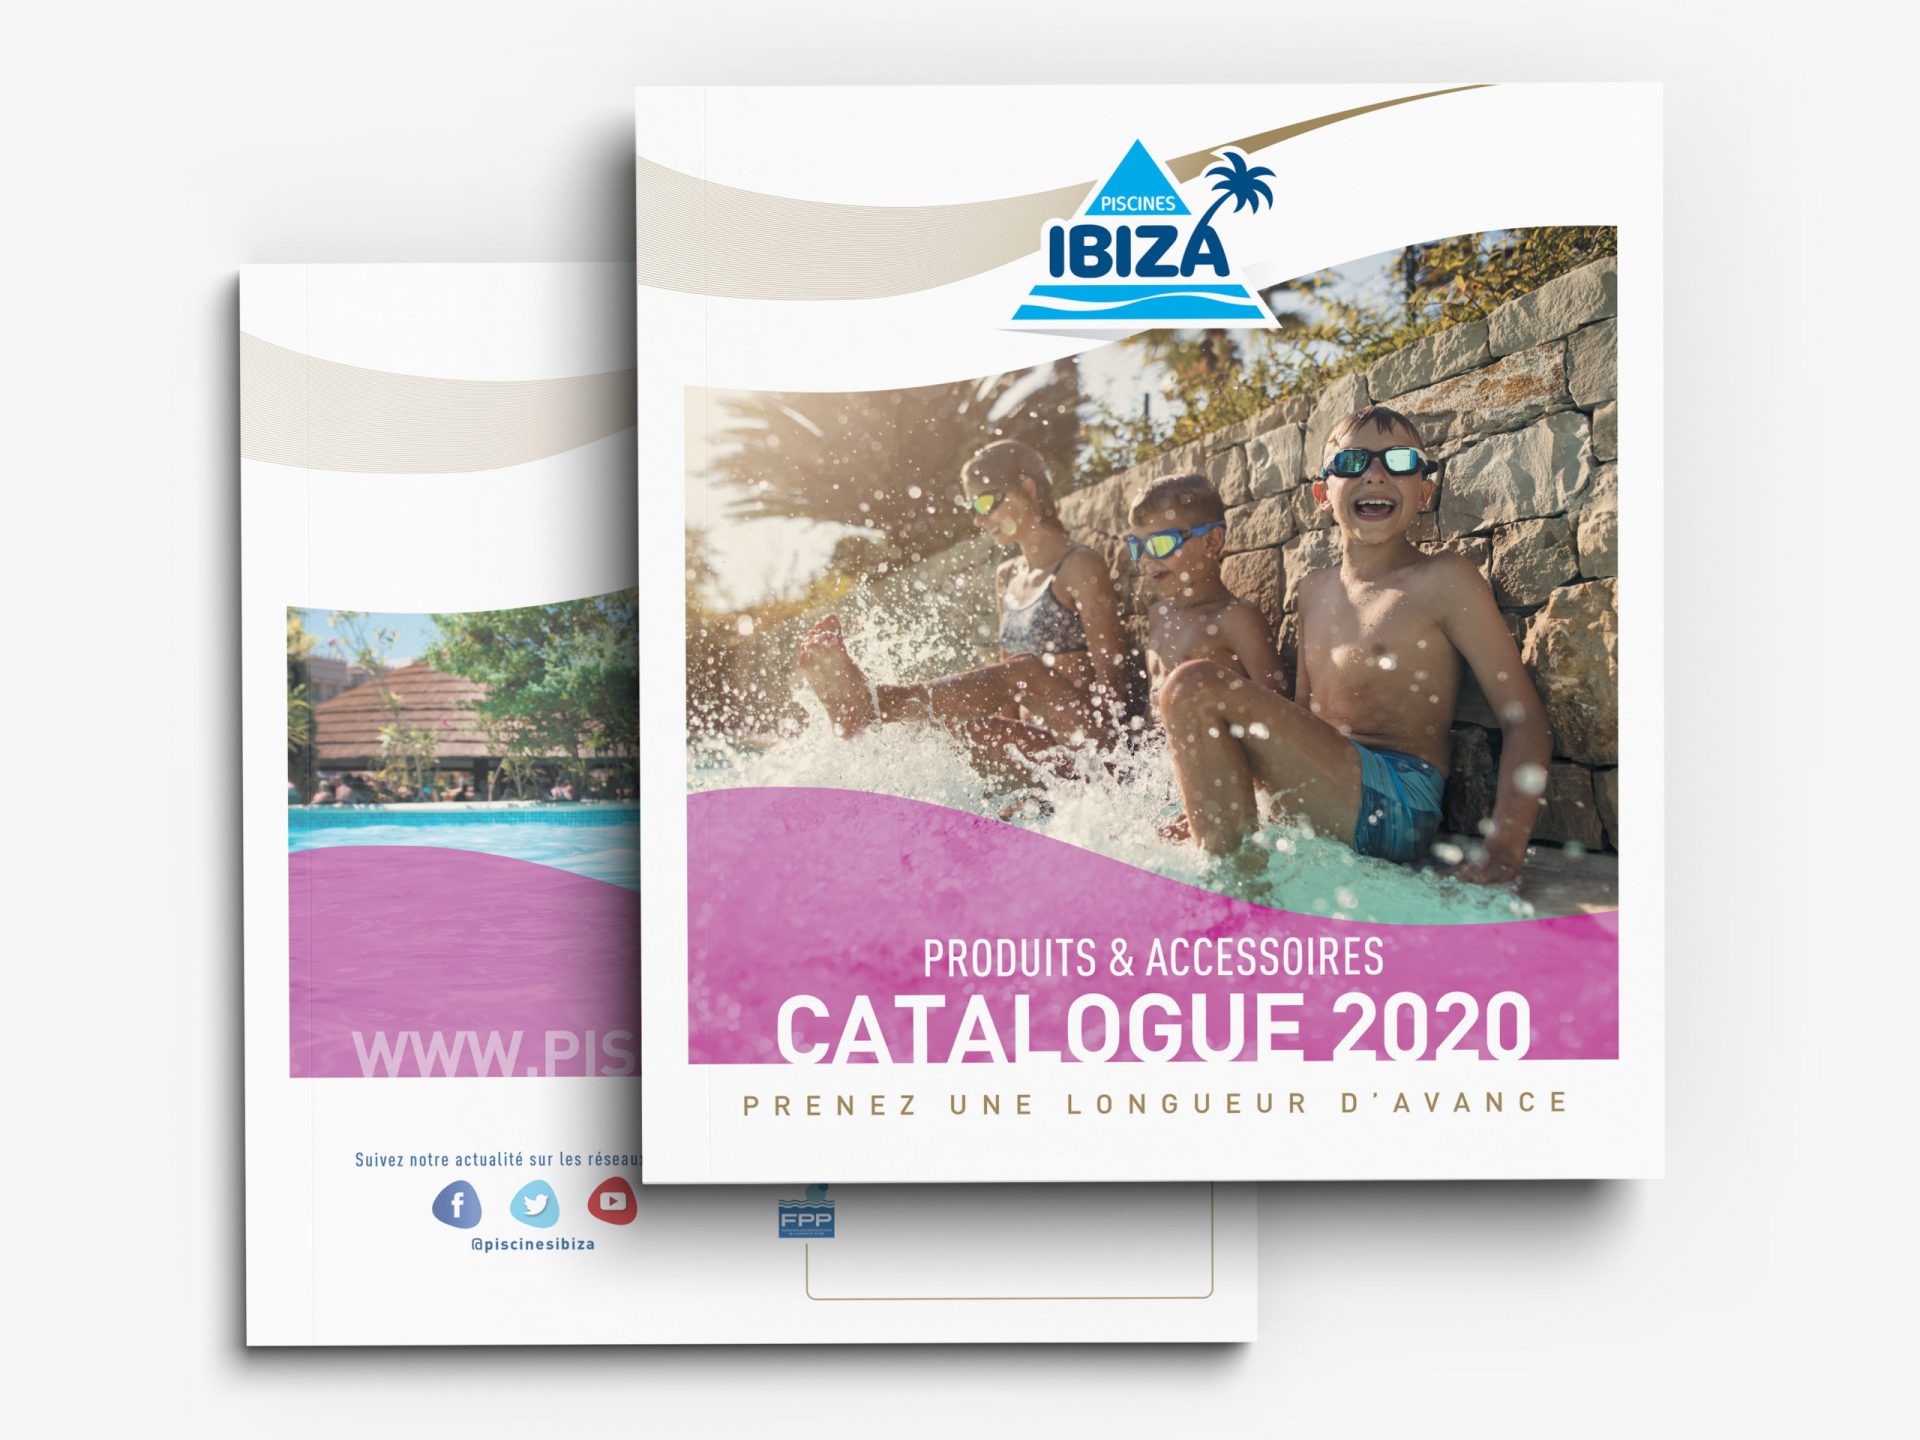 Ibiza-catalogue2020-01-scaled.jpg